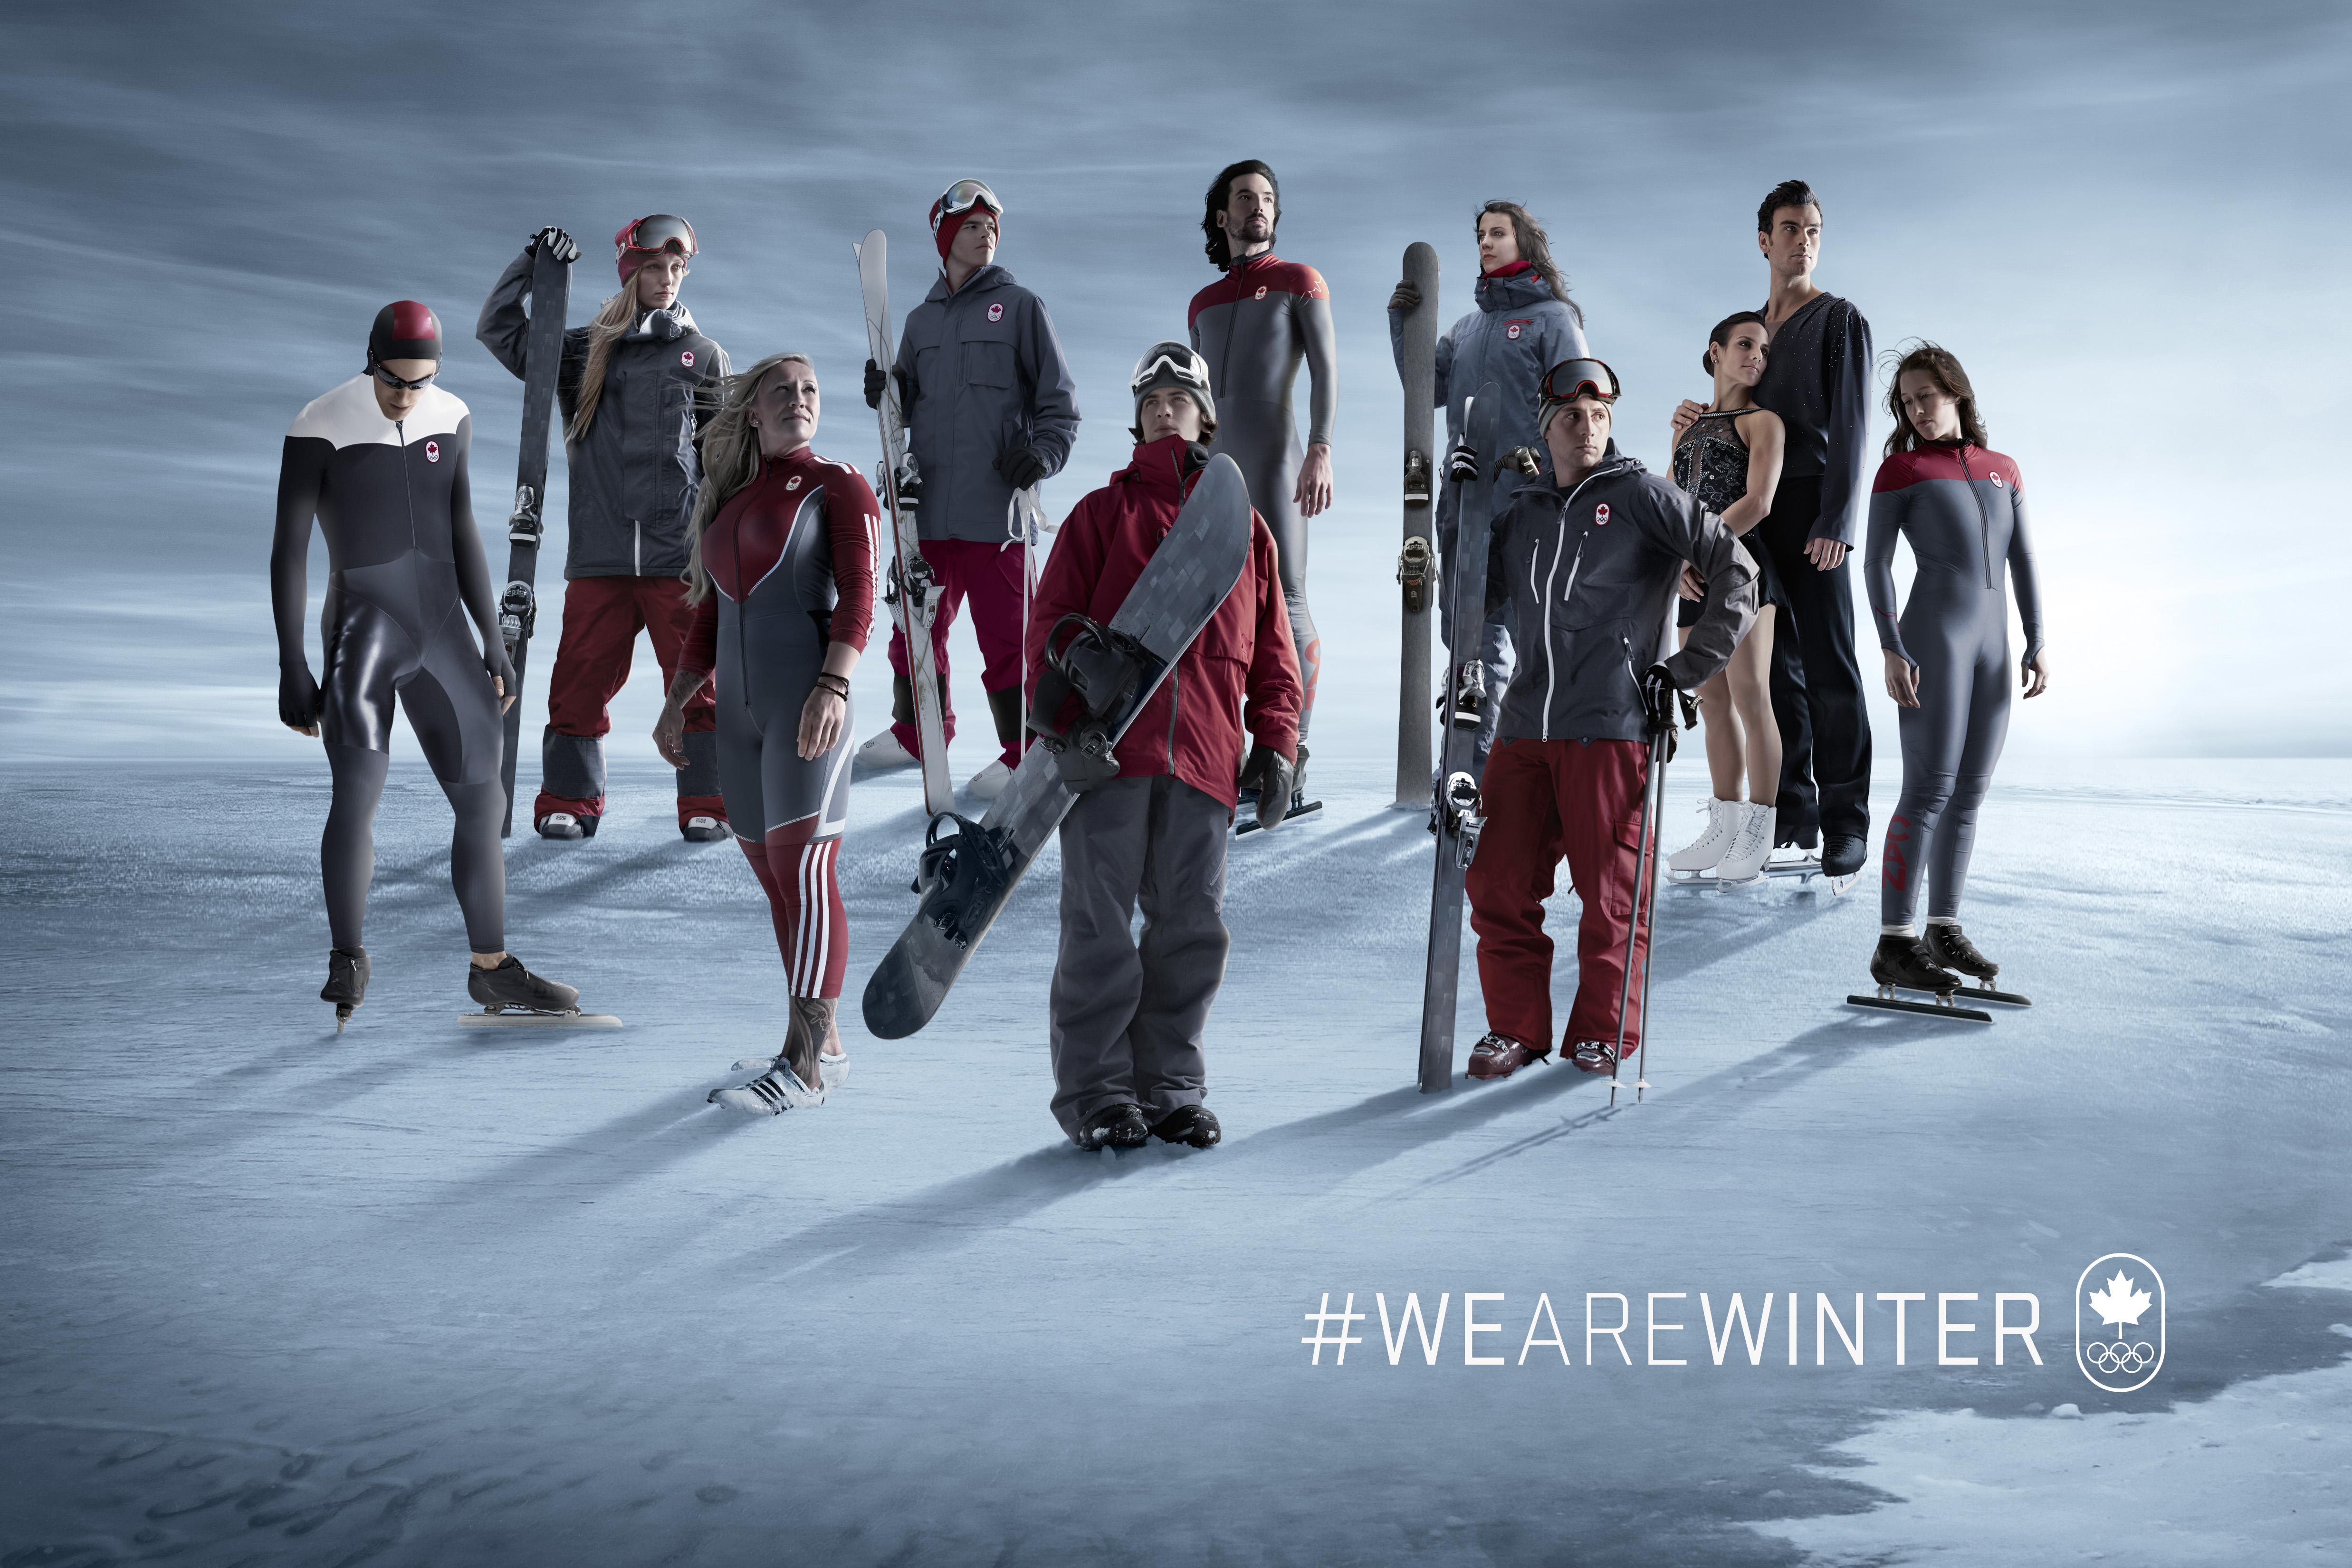 WEAREWINTER Team Canada Official Olympic Team